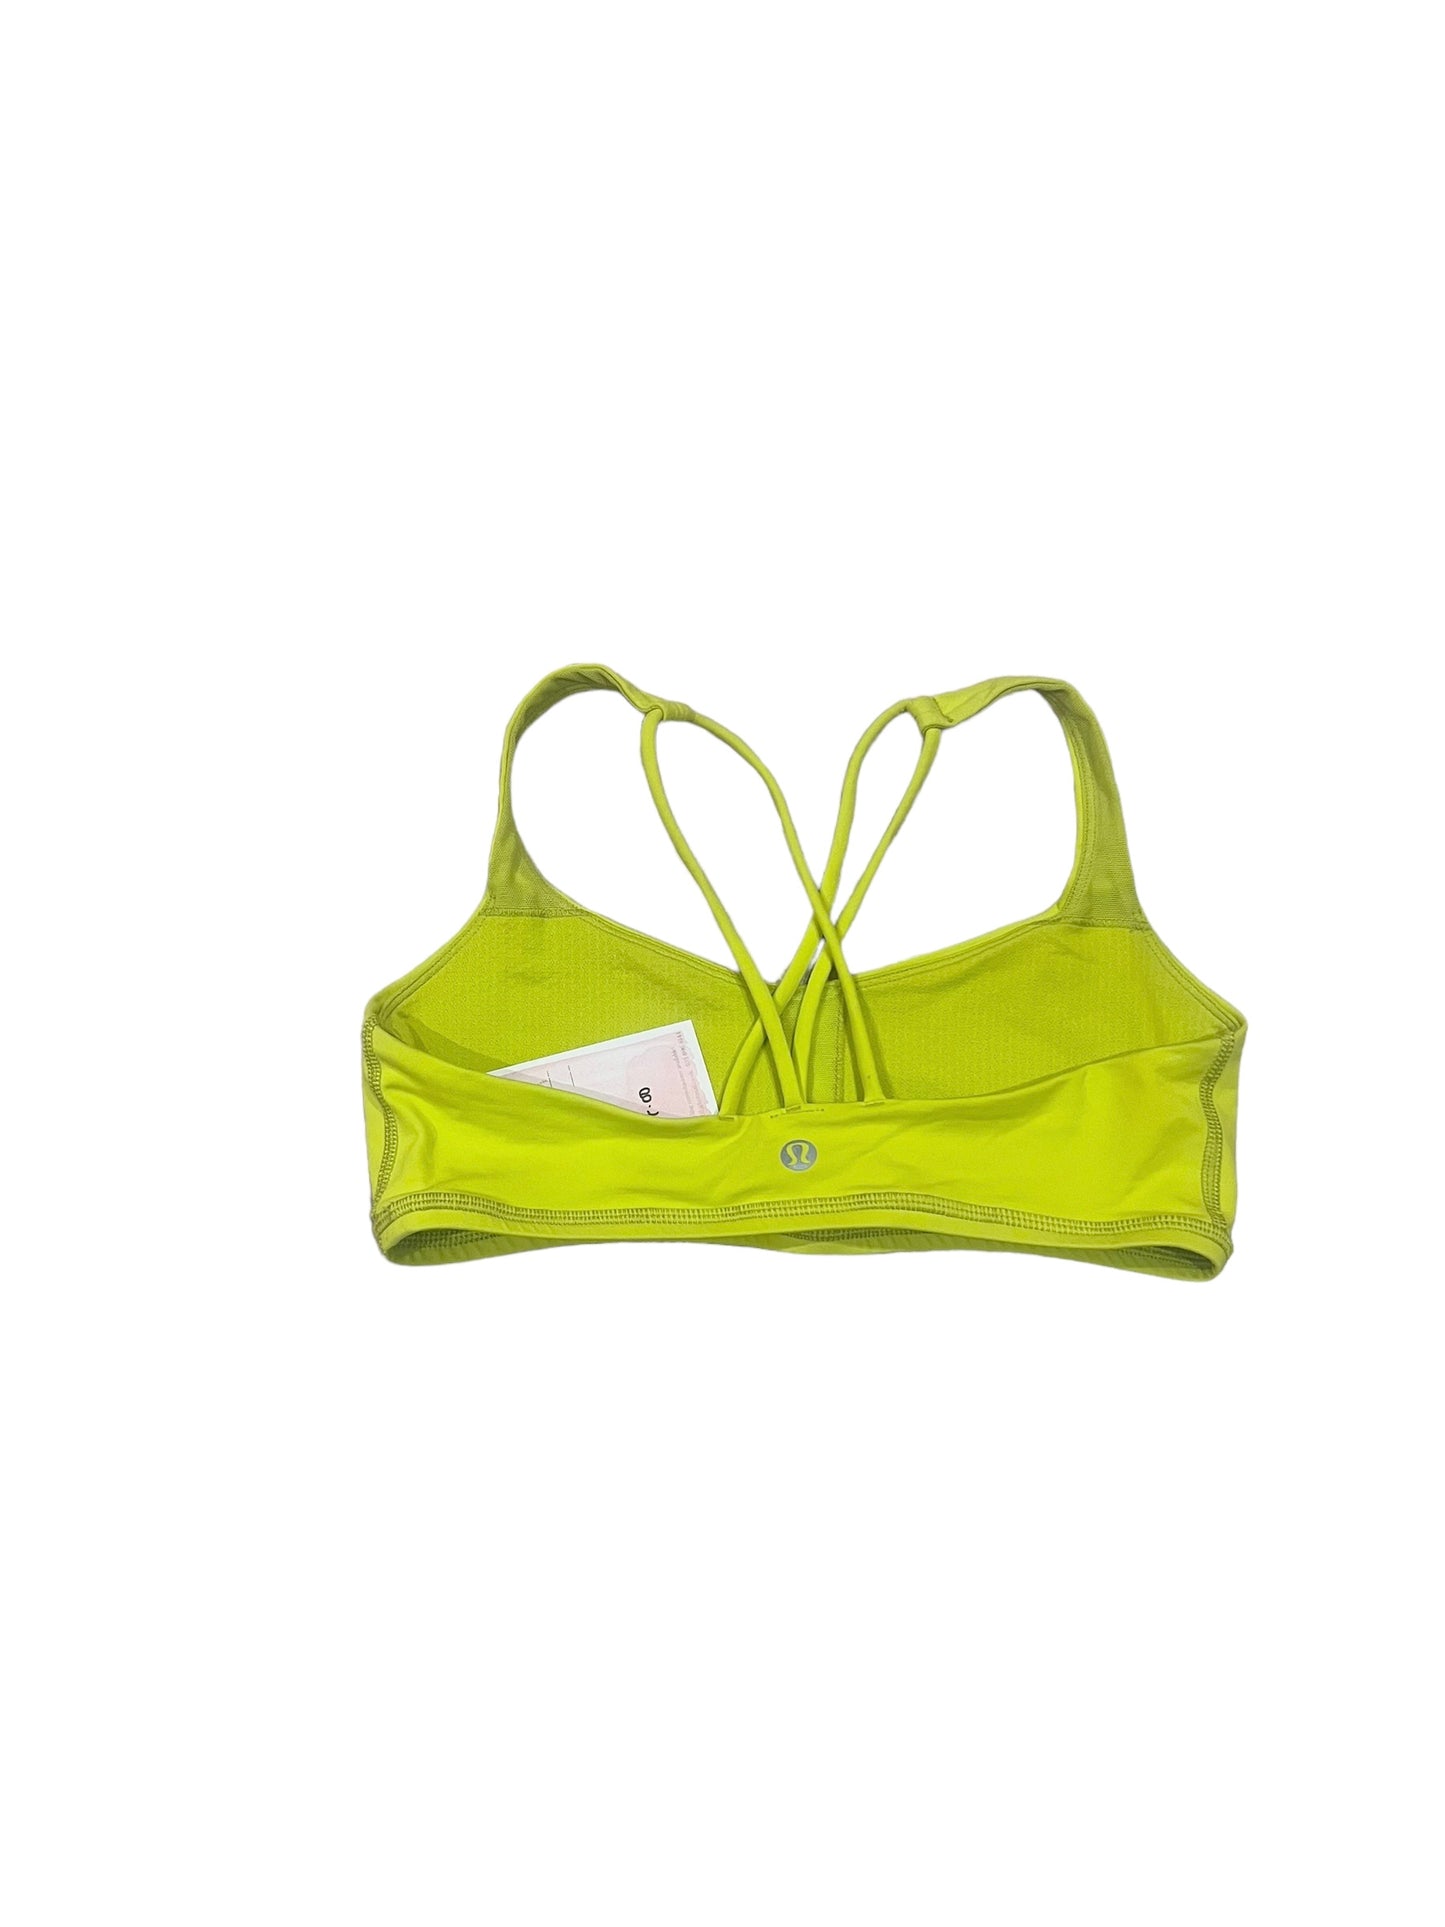 Yellow/Green Lululemon Sports Bra